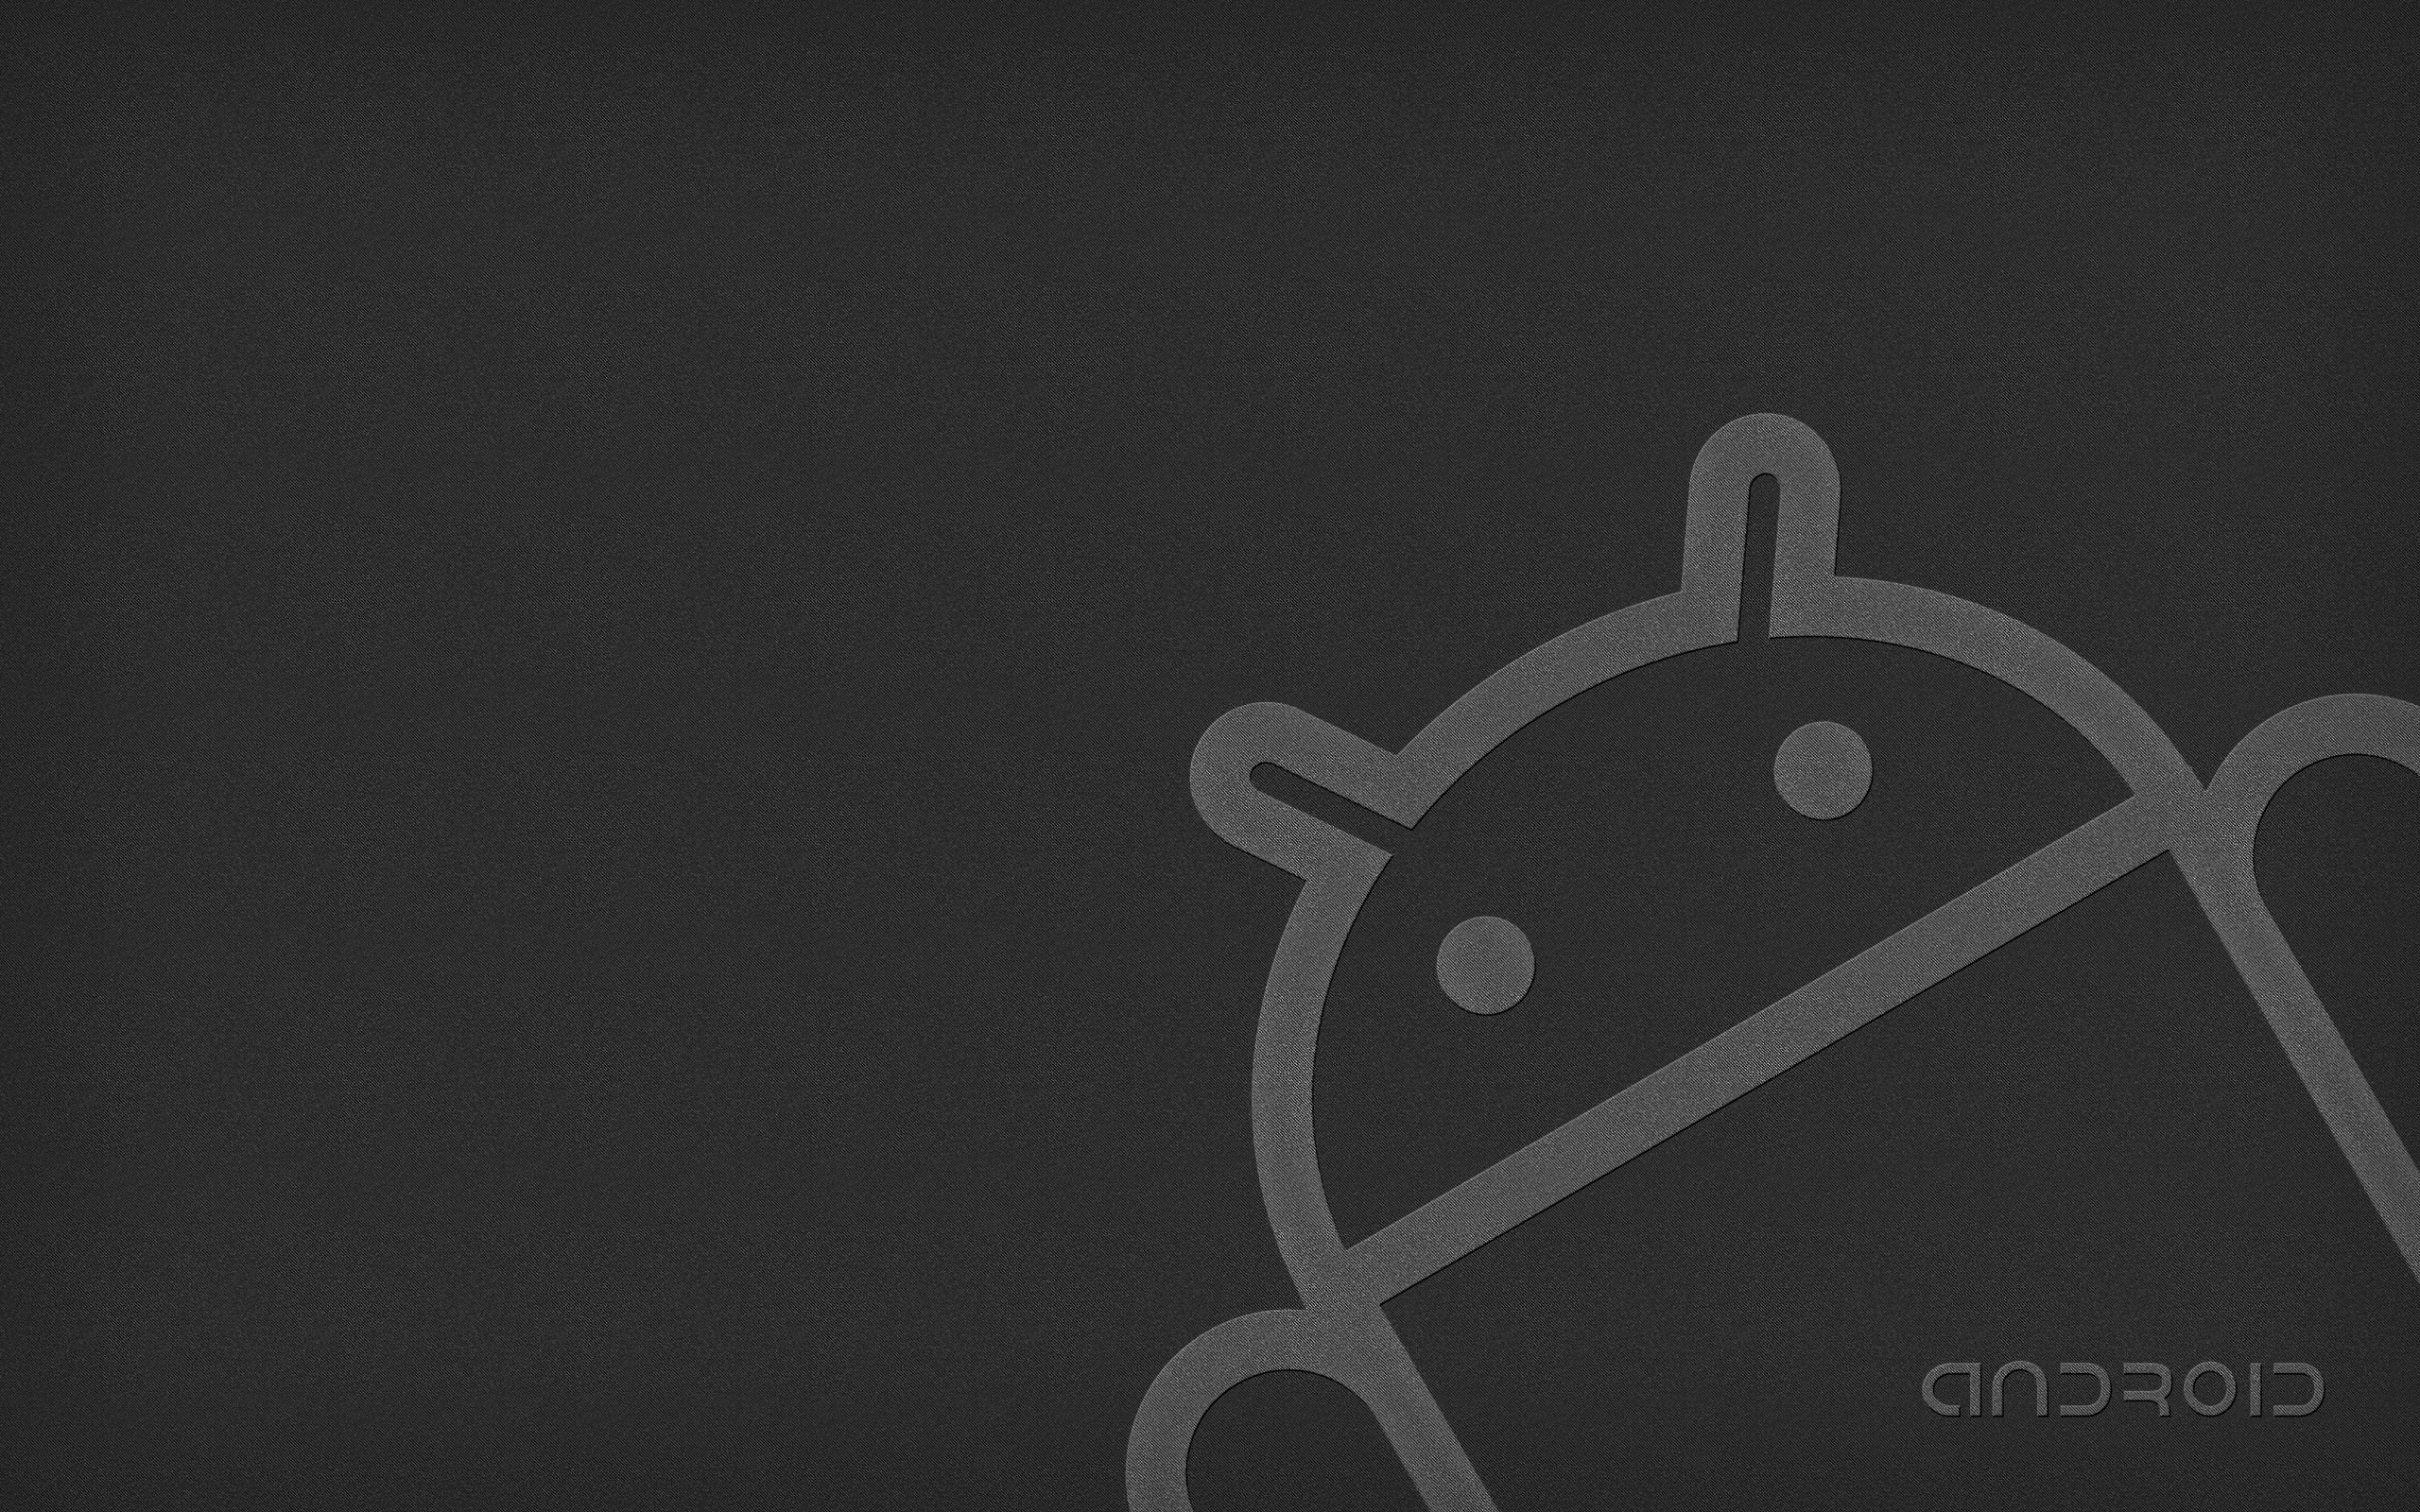 Android logo HD wallpaper | Wallpaper Flare